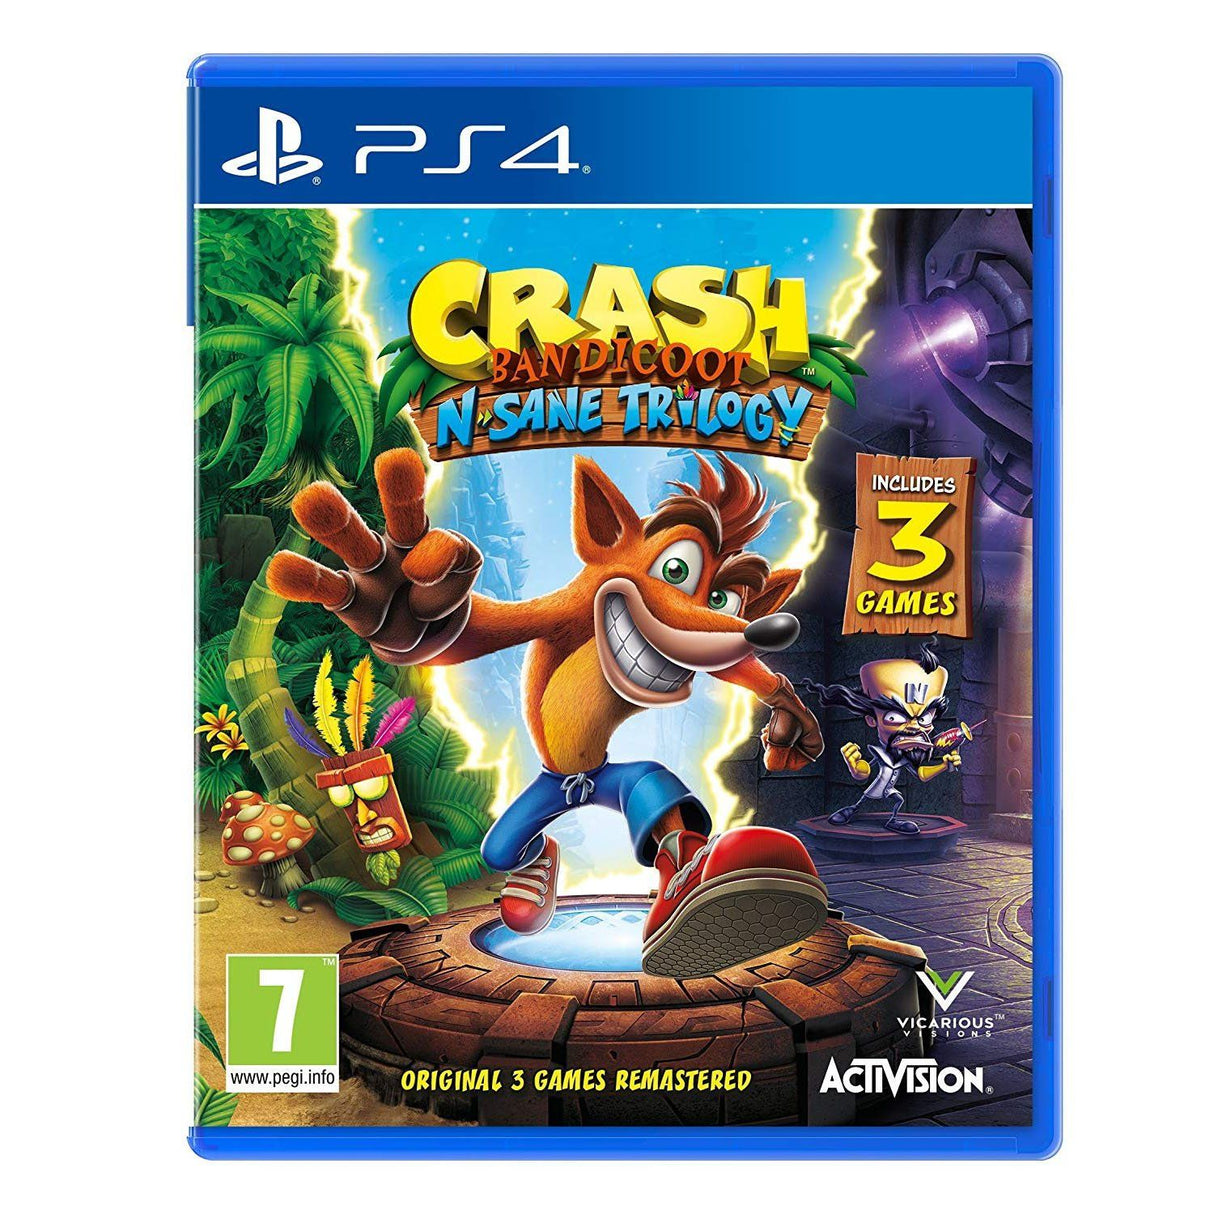 Crash Bandicoot N. Sane Trilogy For PlayStation 4 "Region 2" - Level UpACTIVISIONPlaystation Video Games5030917236662